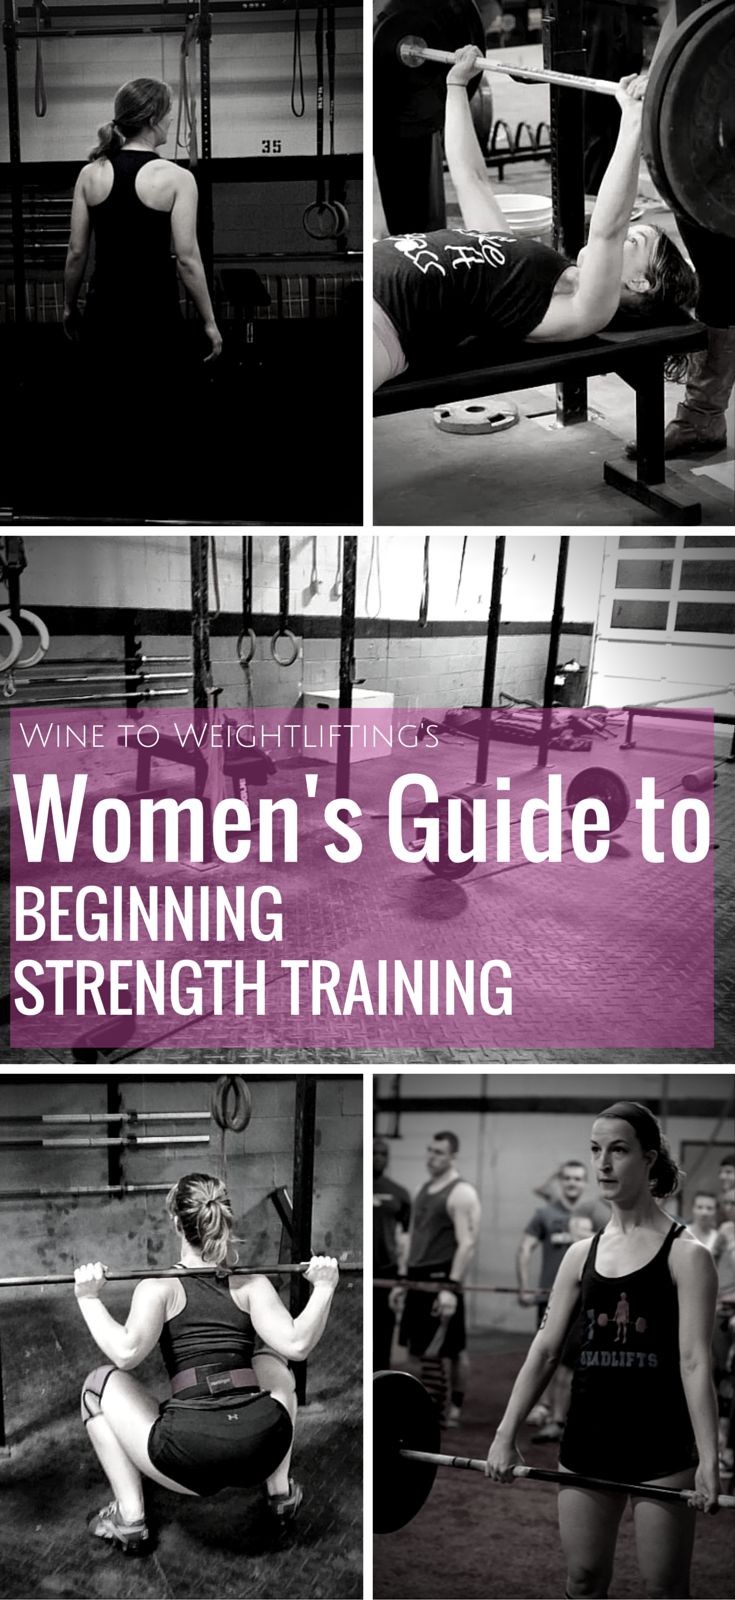 Women's guide to beginning strength training. For...